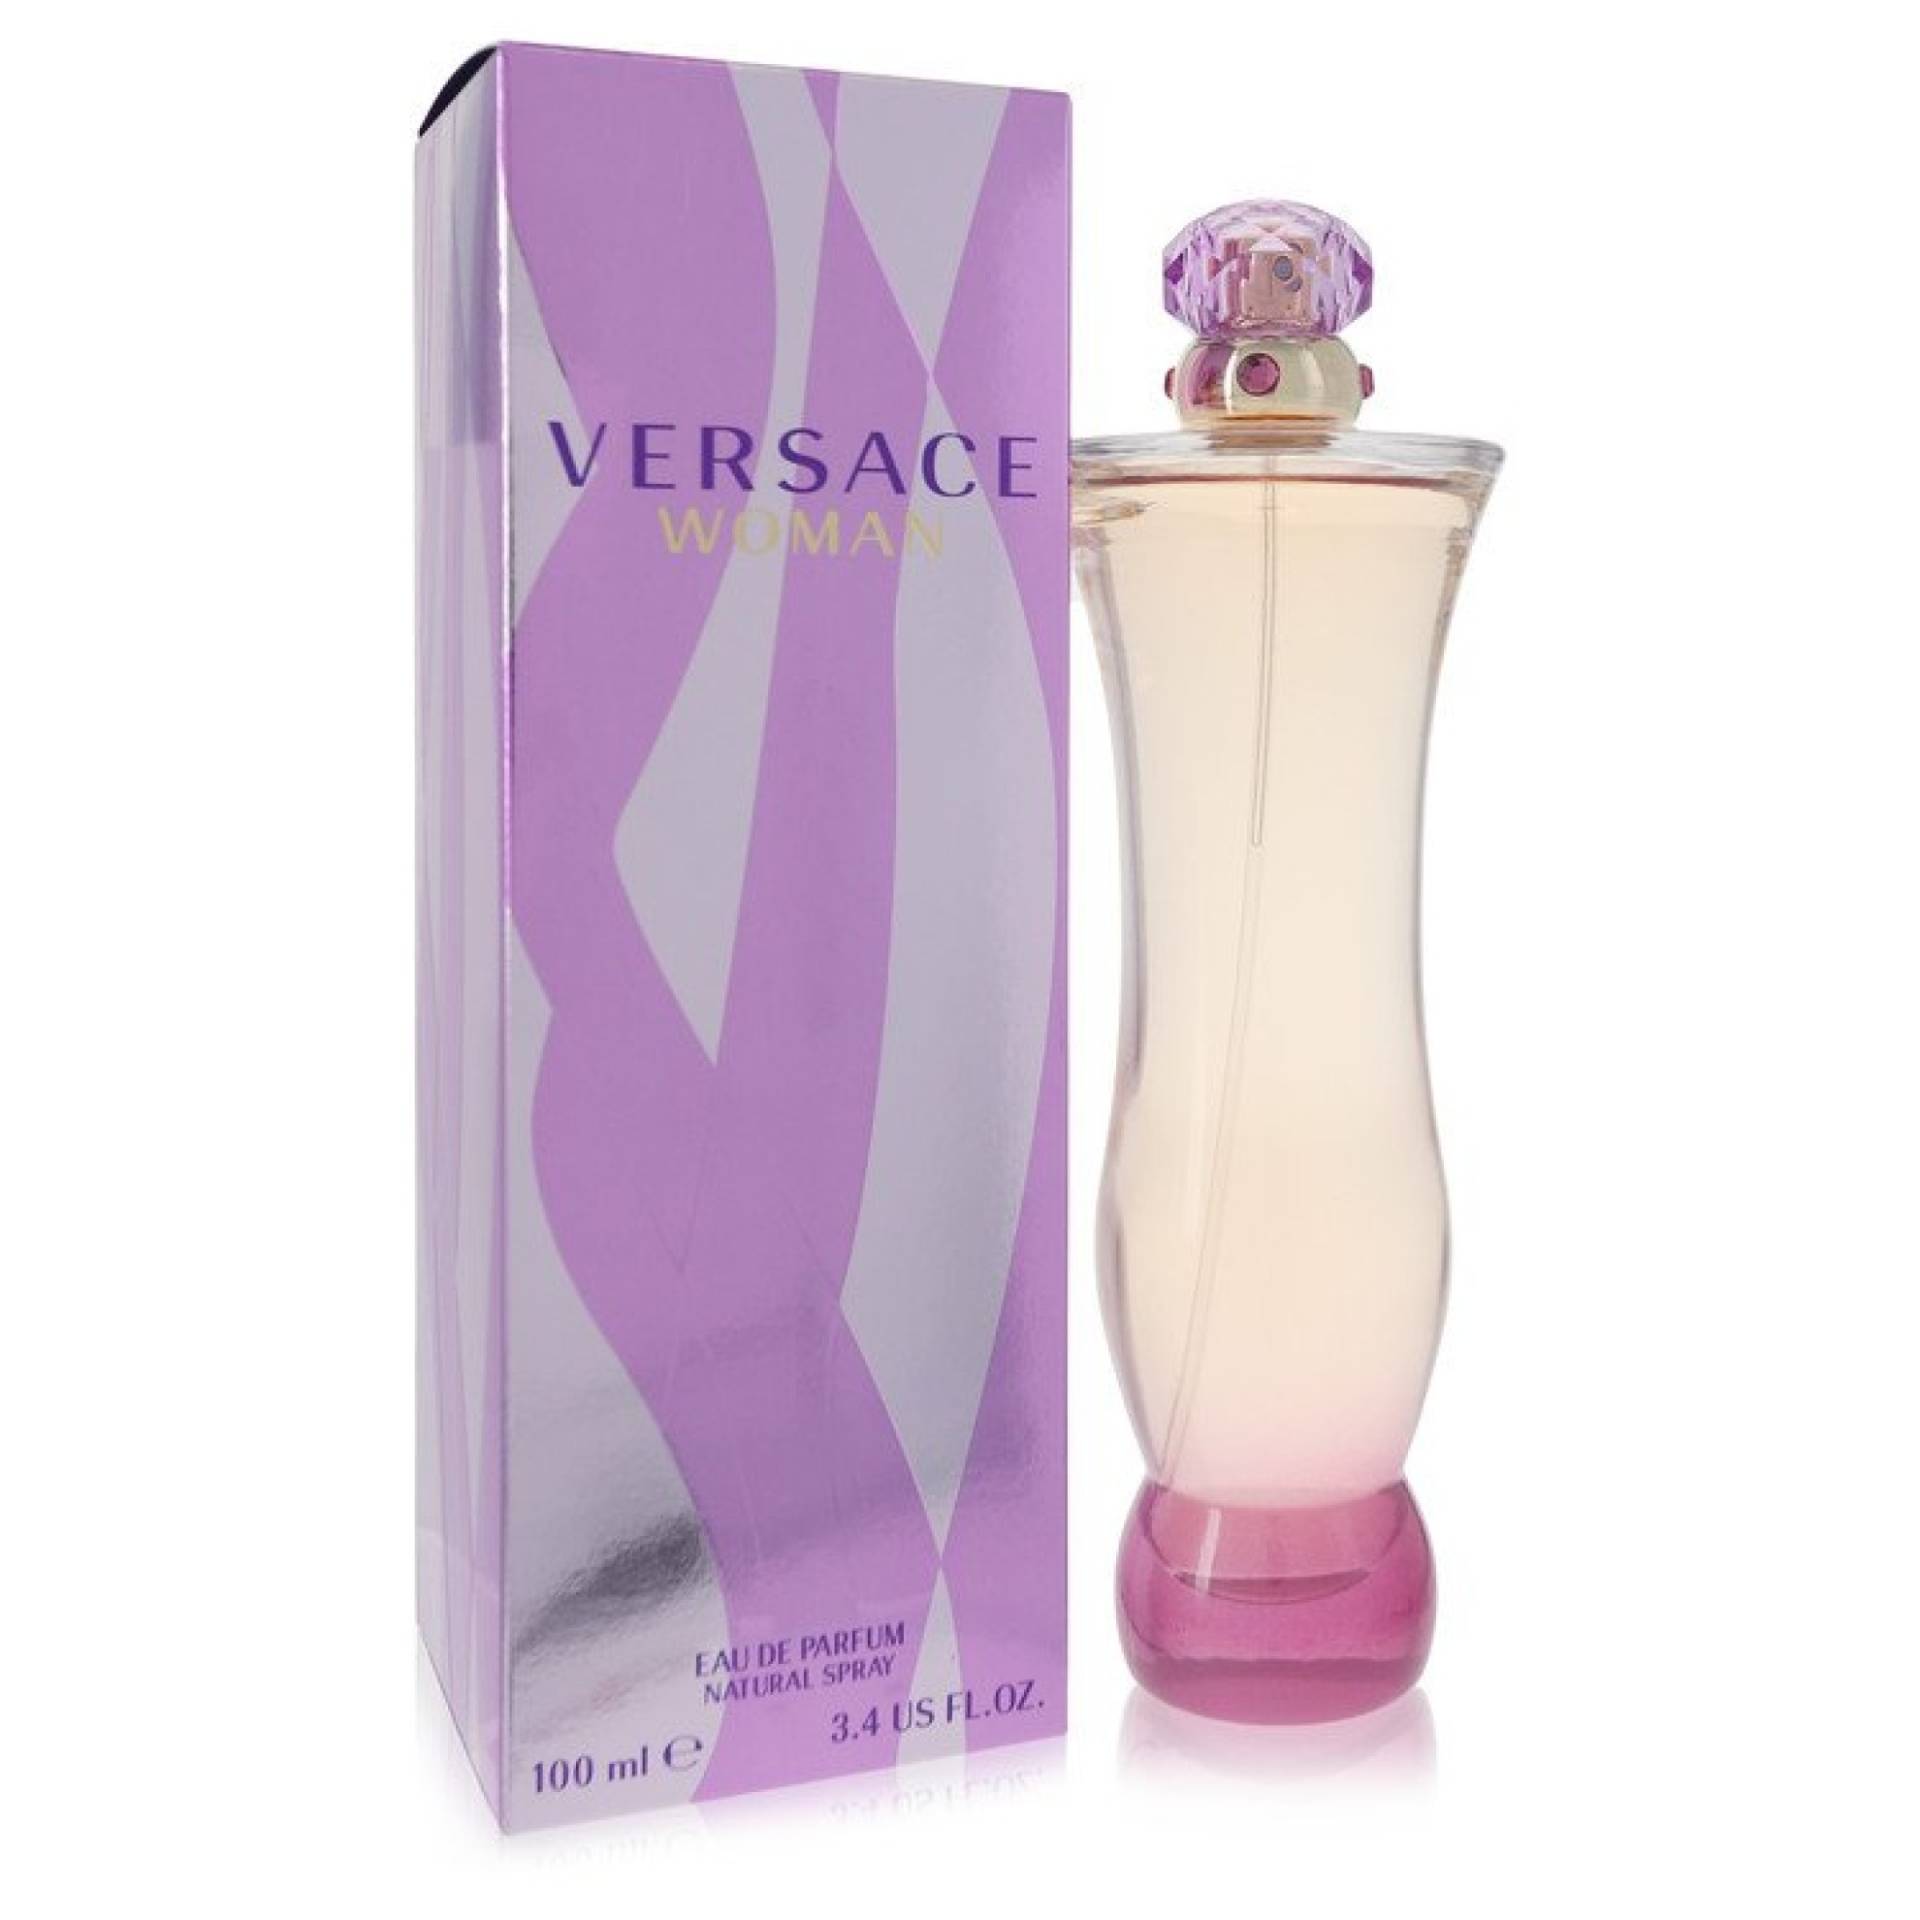 Versace VERSACE WOMAN Eau De Parfum Spray 100 ml von Versace